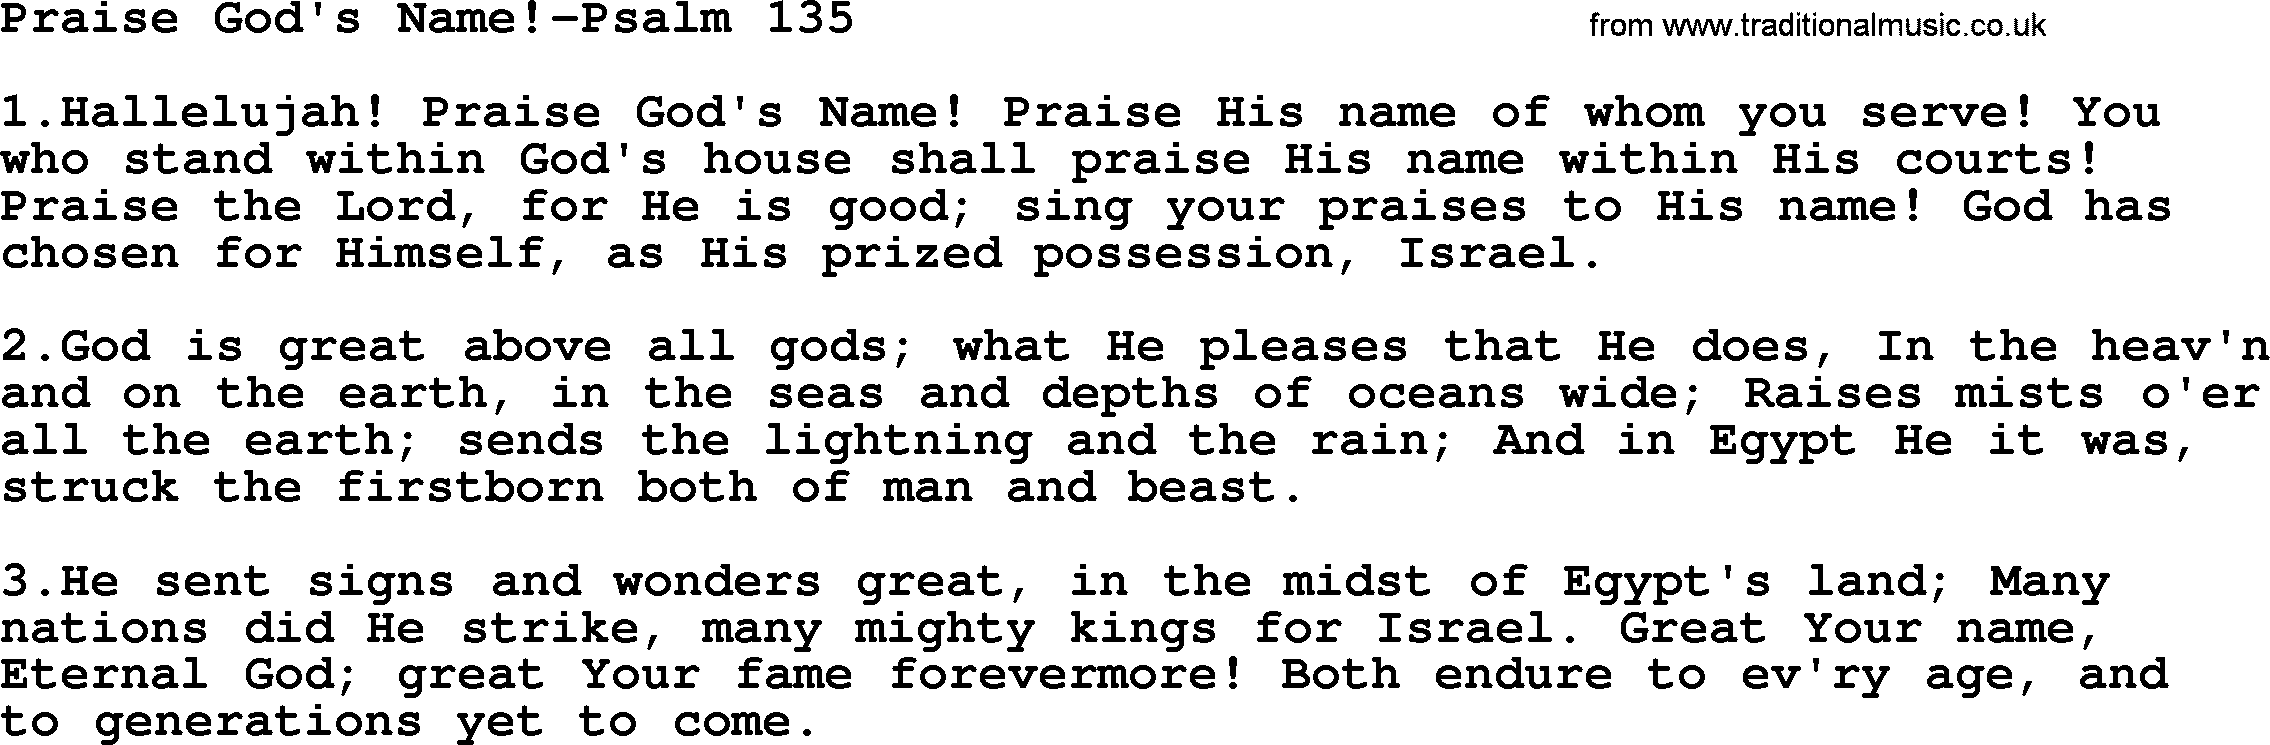 Hymns from the Psalms, Hymn: Praise God's Name!-Psalm 135, lyrics with PDF